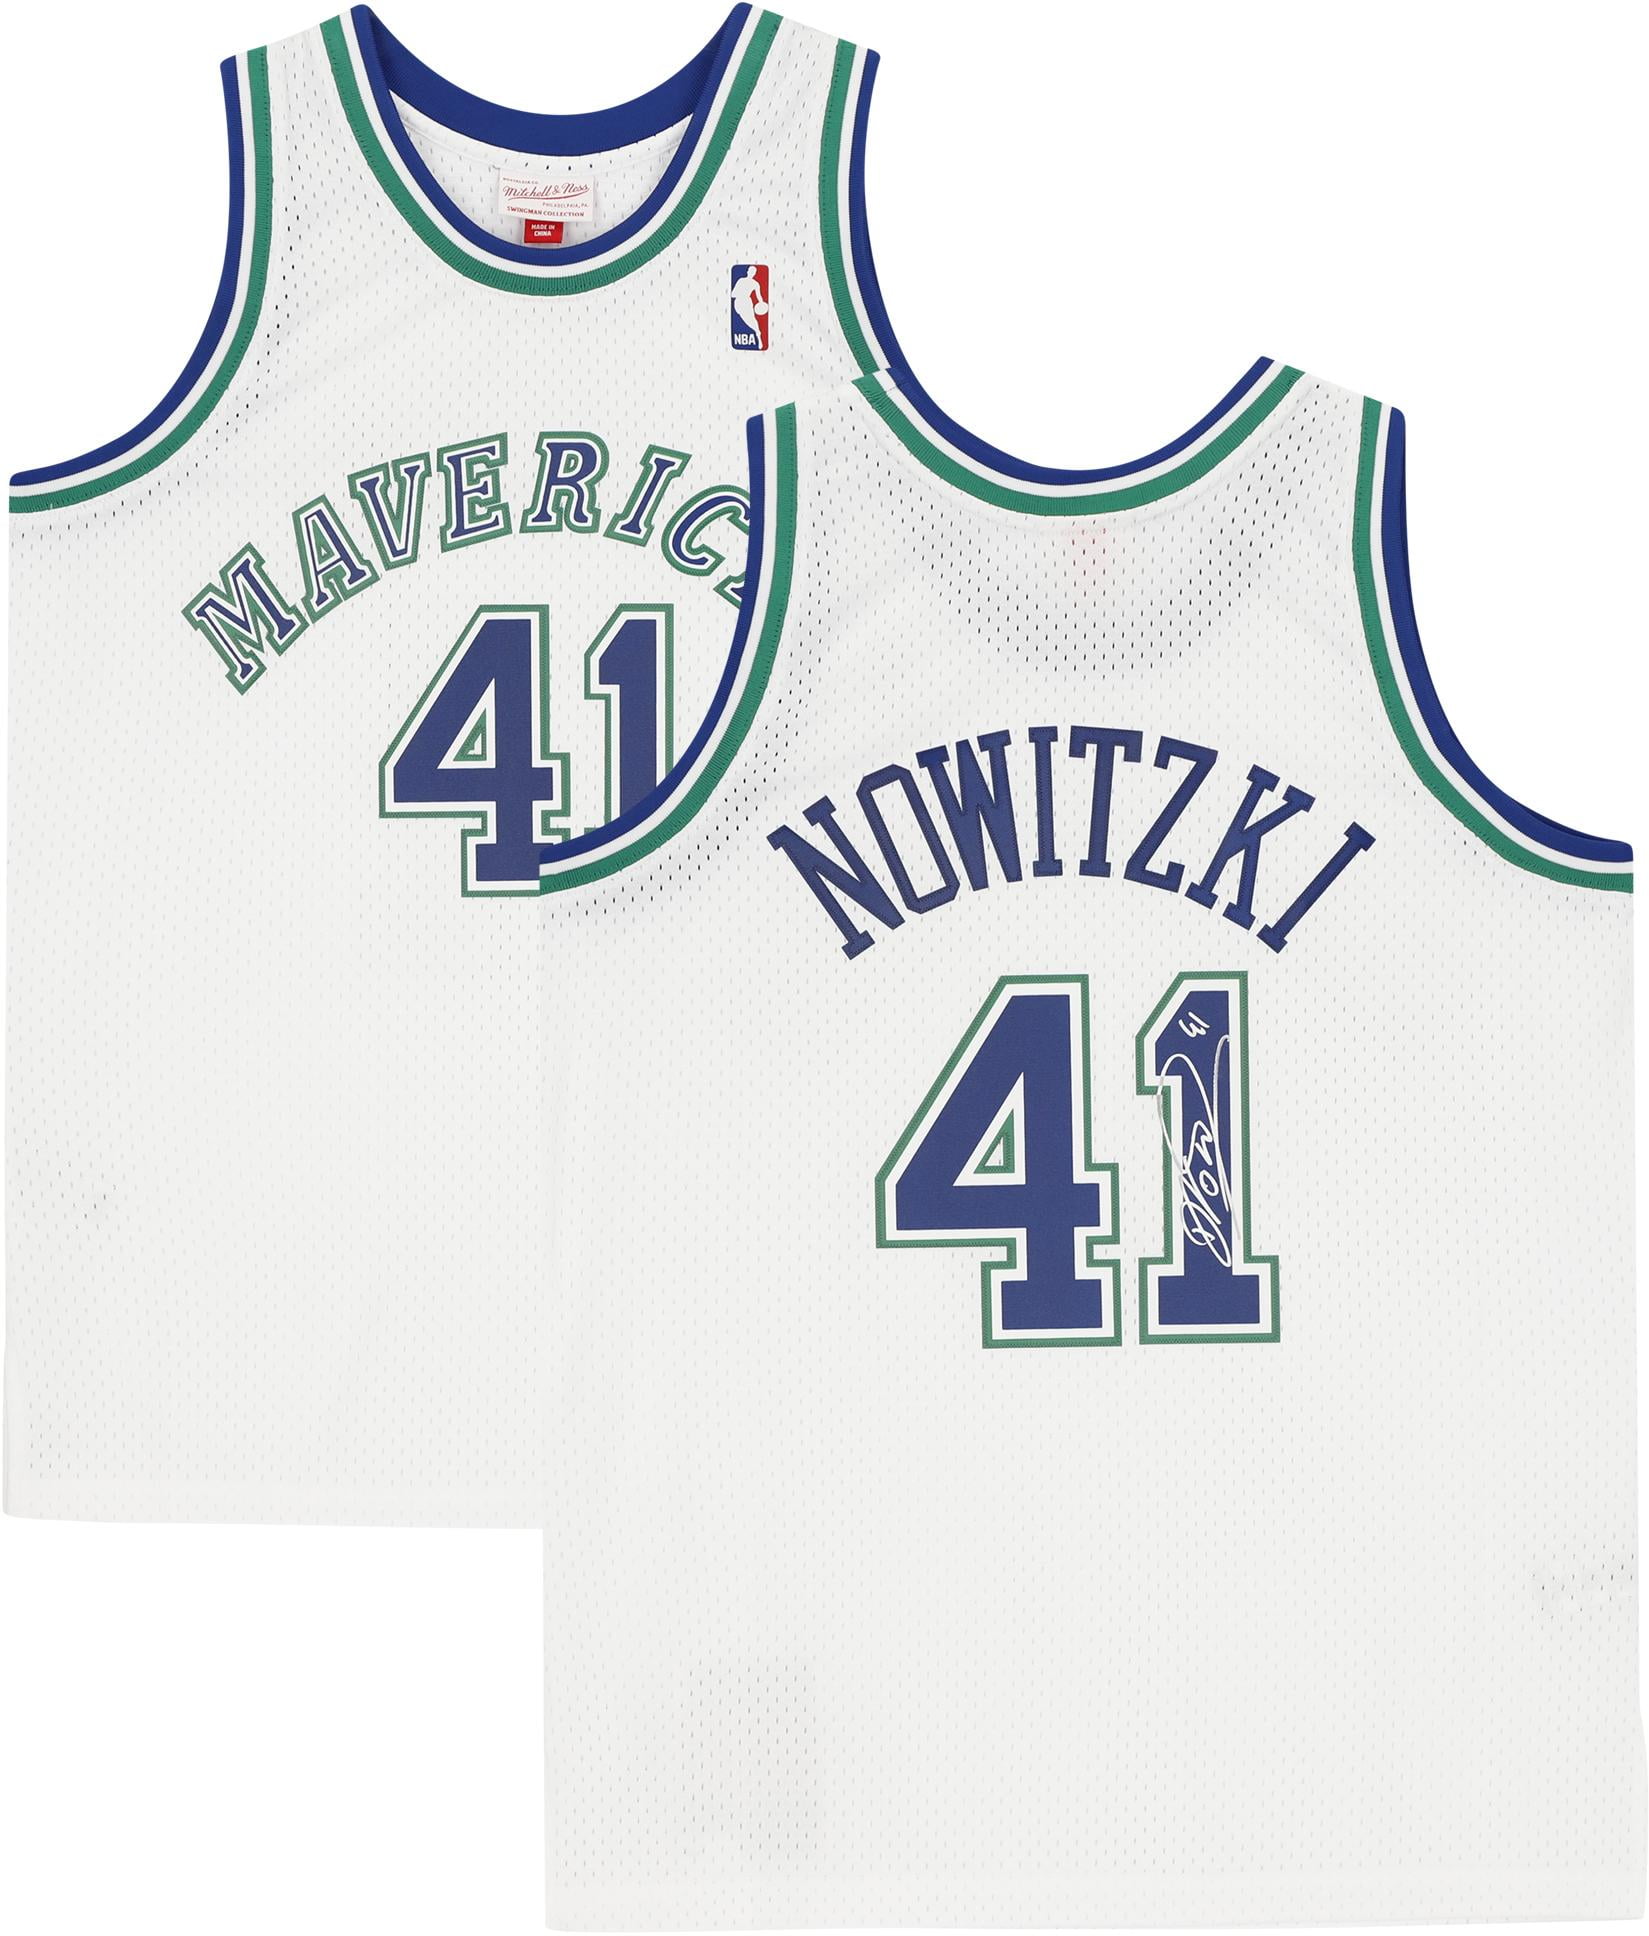 2011 NBA Champions Dallas Mavericks 41 Dirk Nowitzki Green Swingman Jersey Cheap